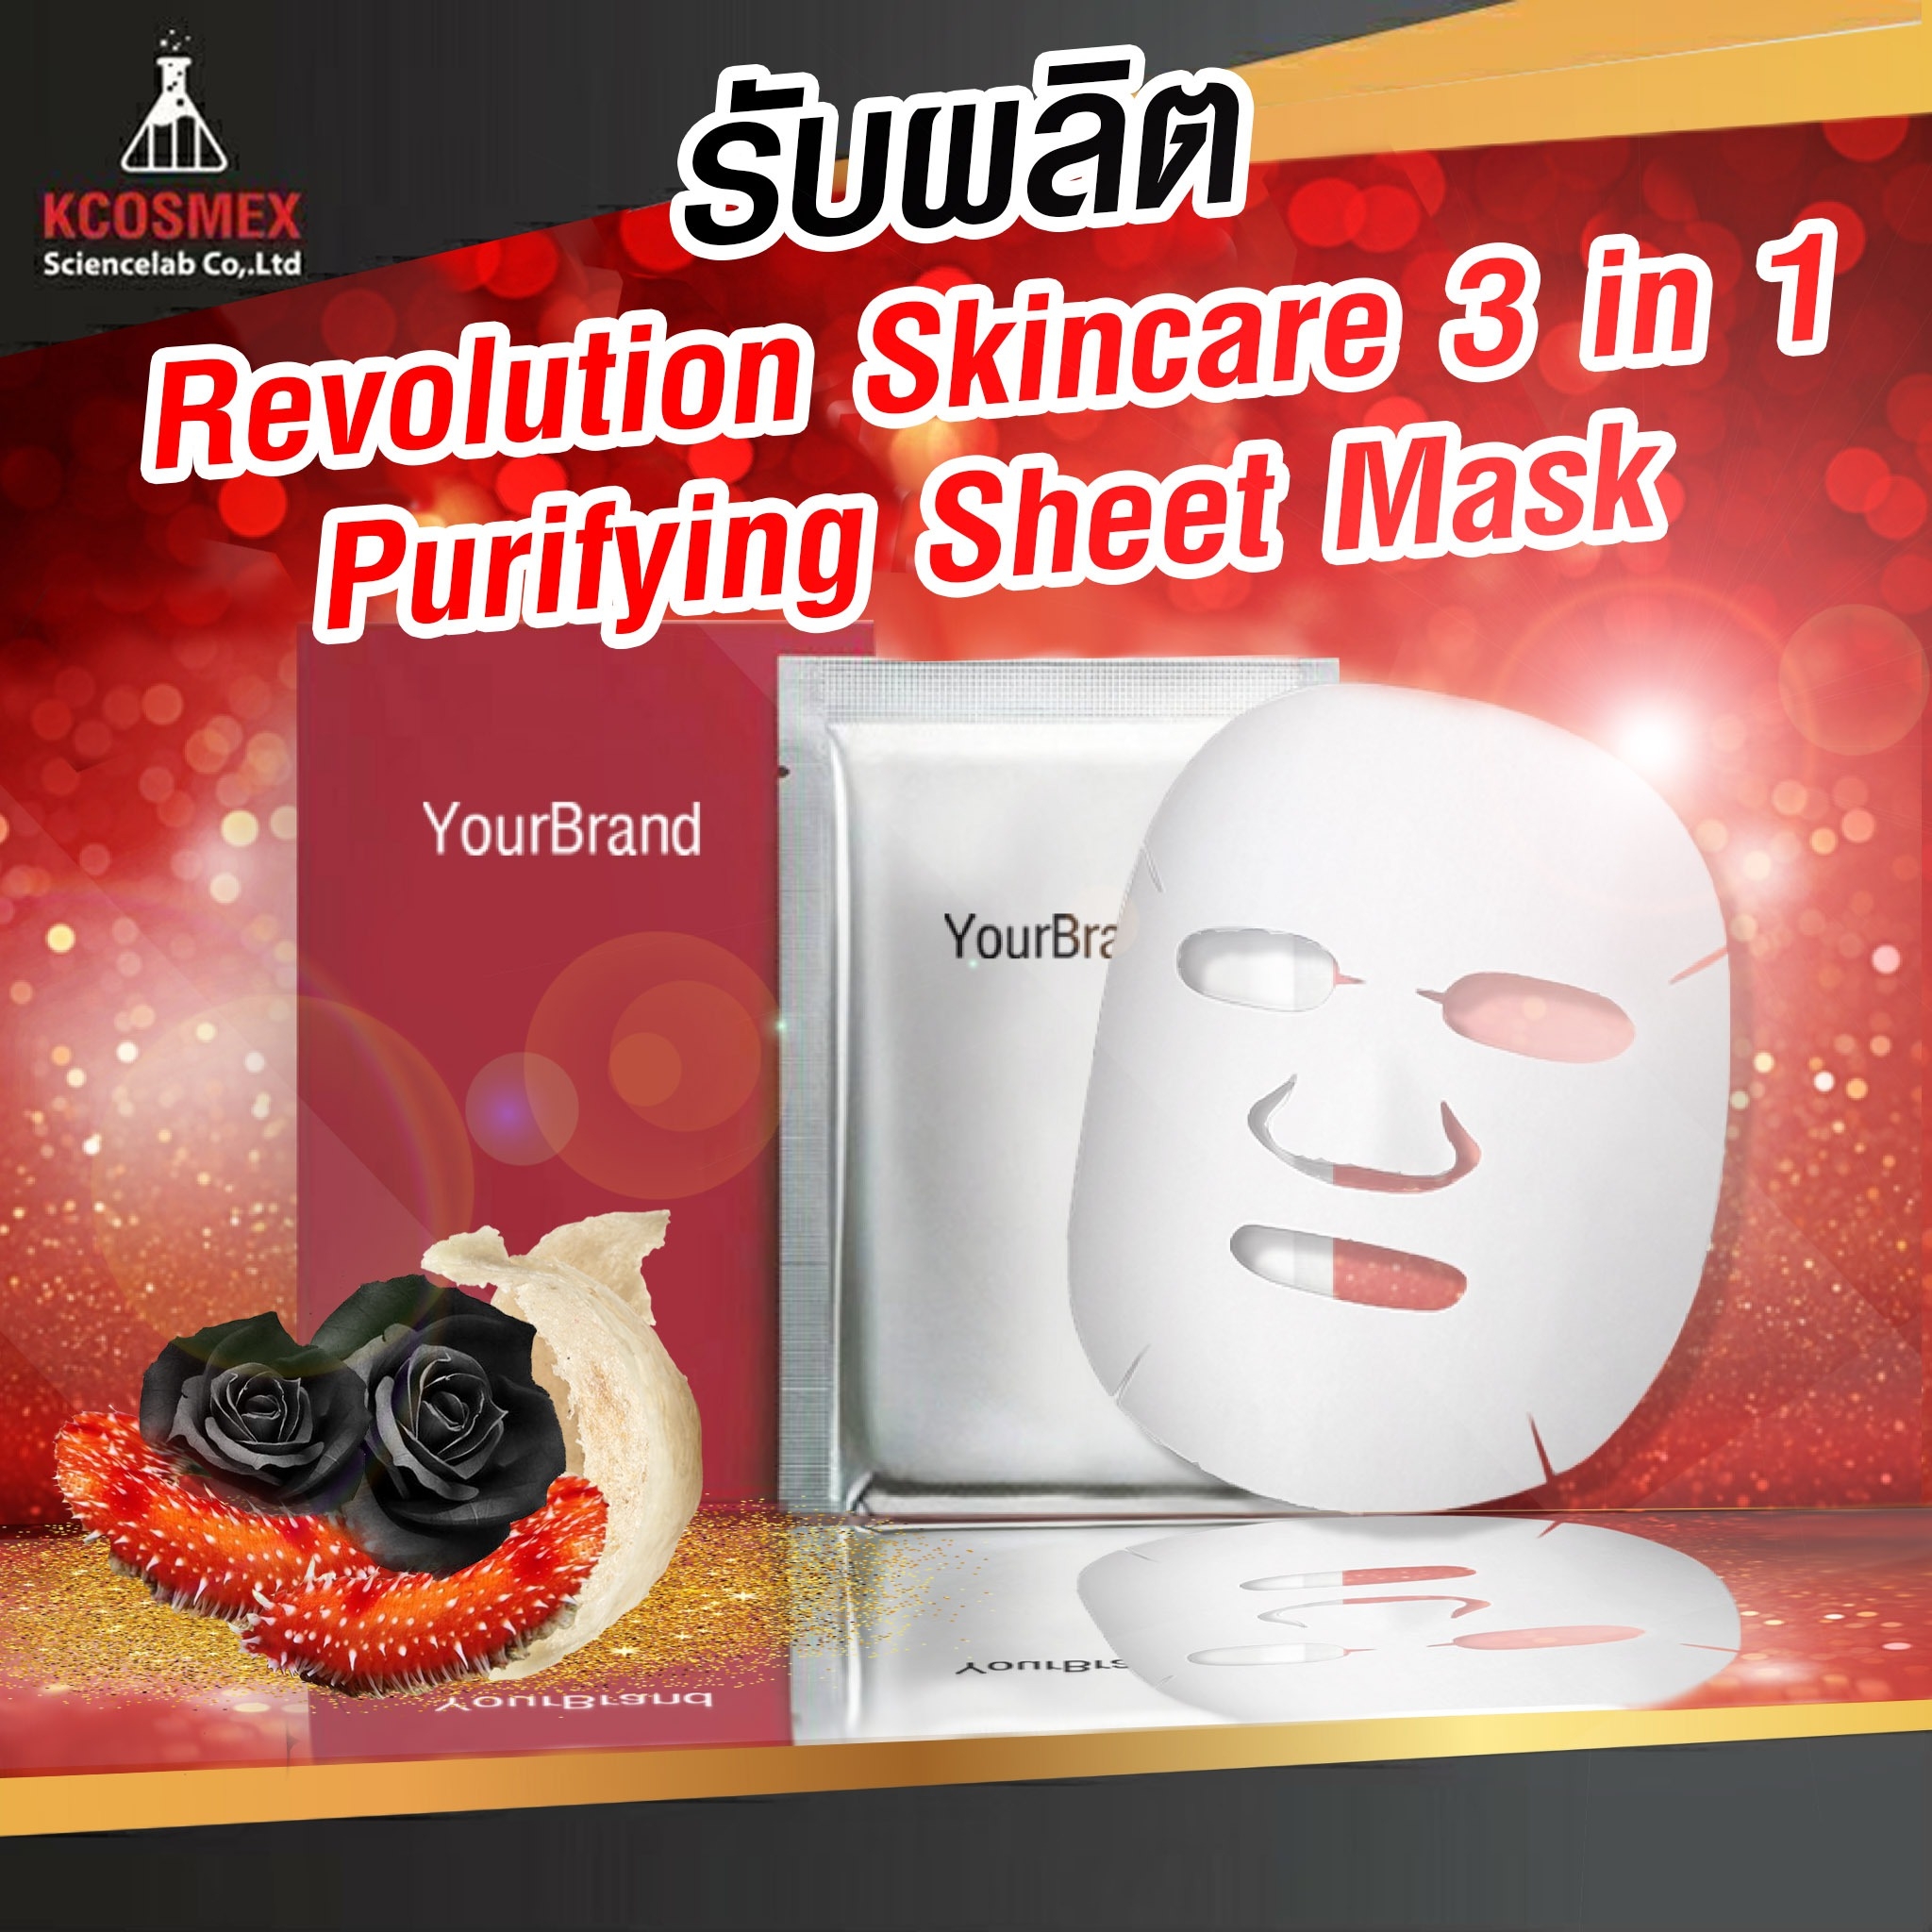 Revolution Skincare 3 in 1 Purifying Sheet Mask